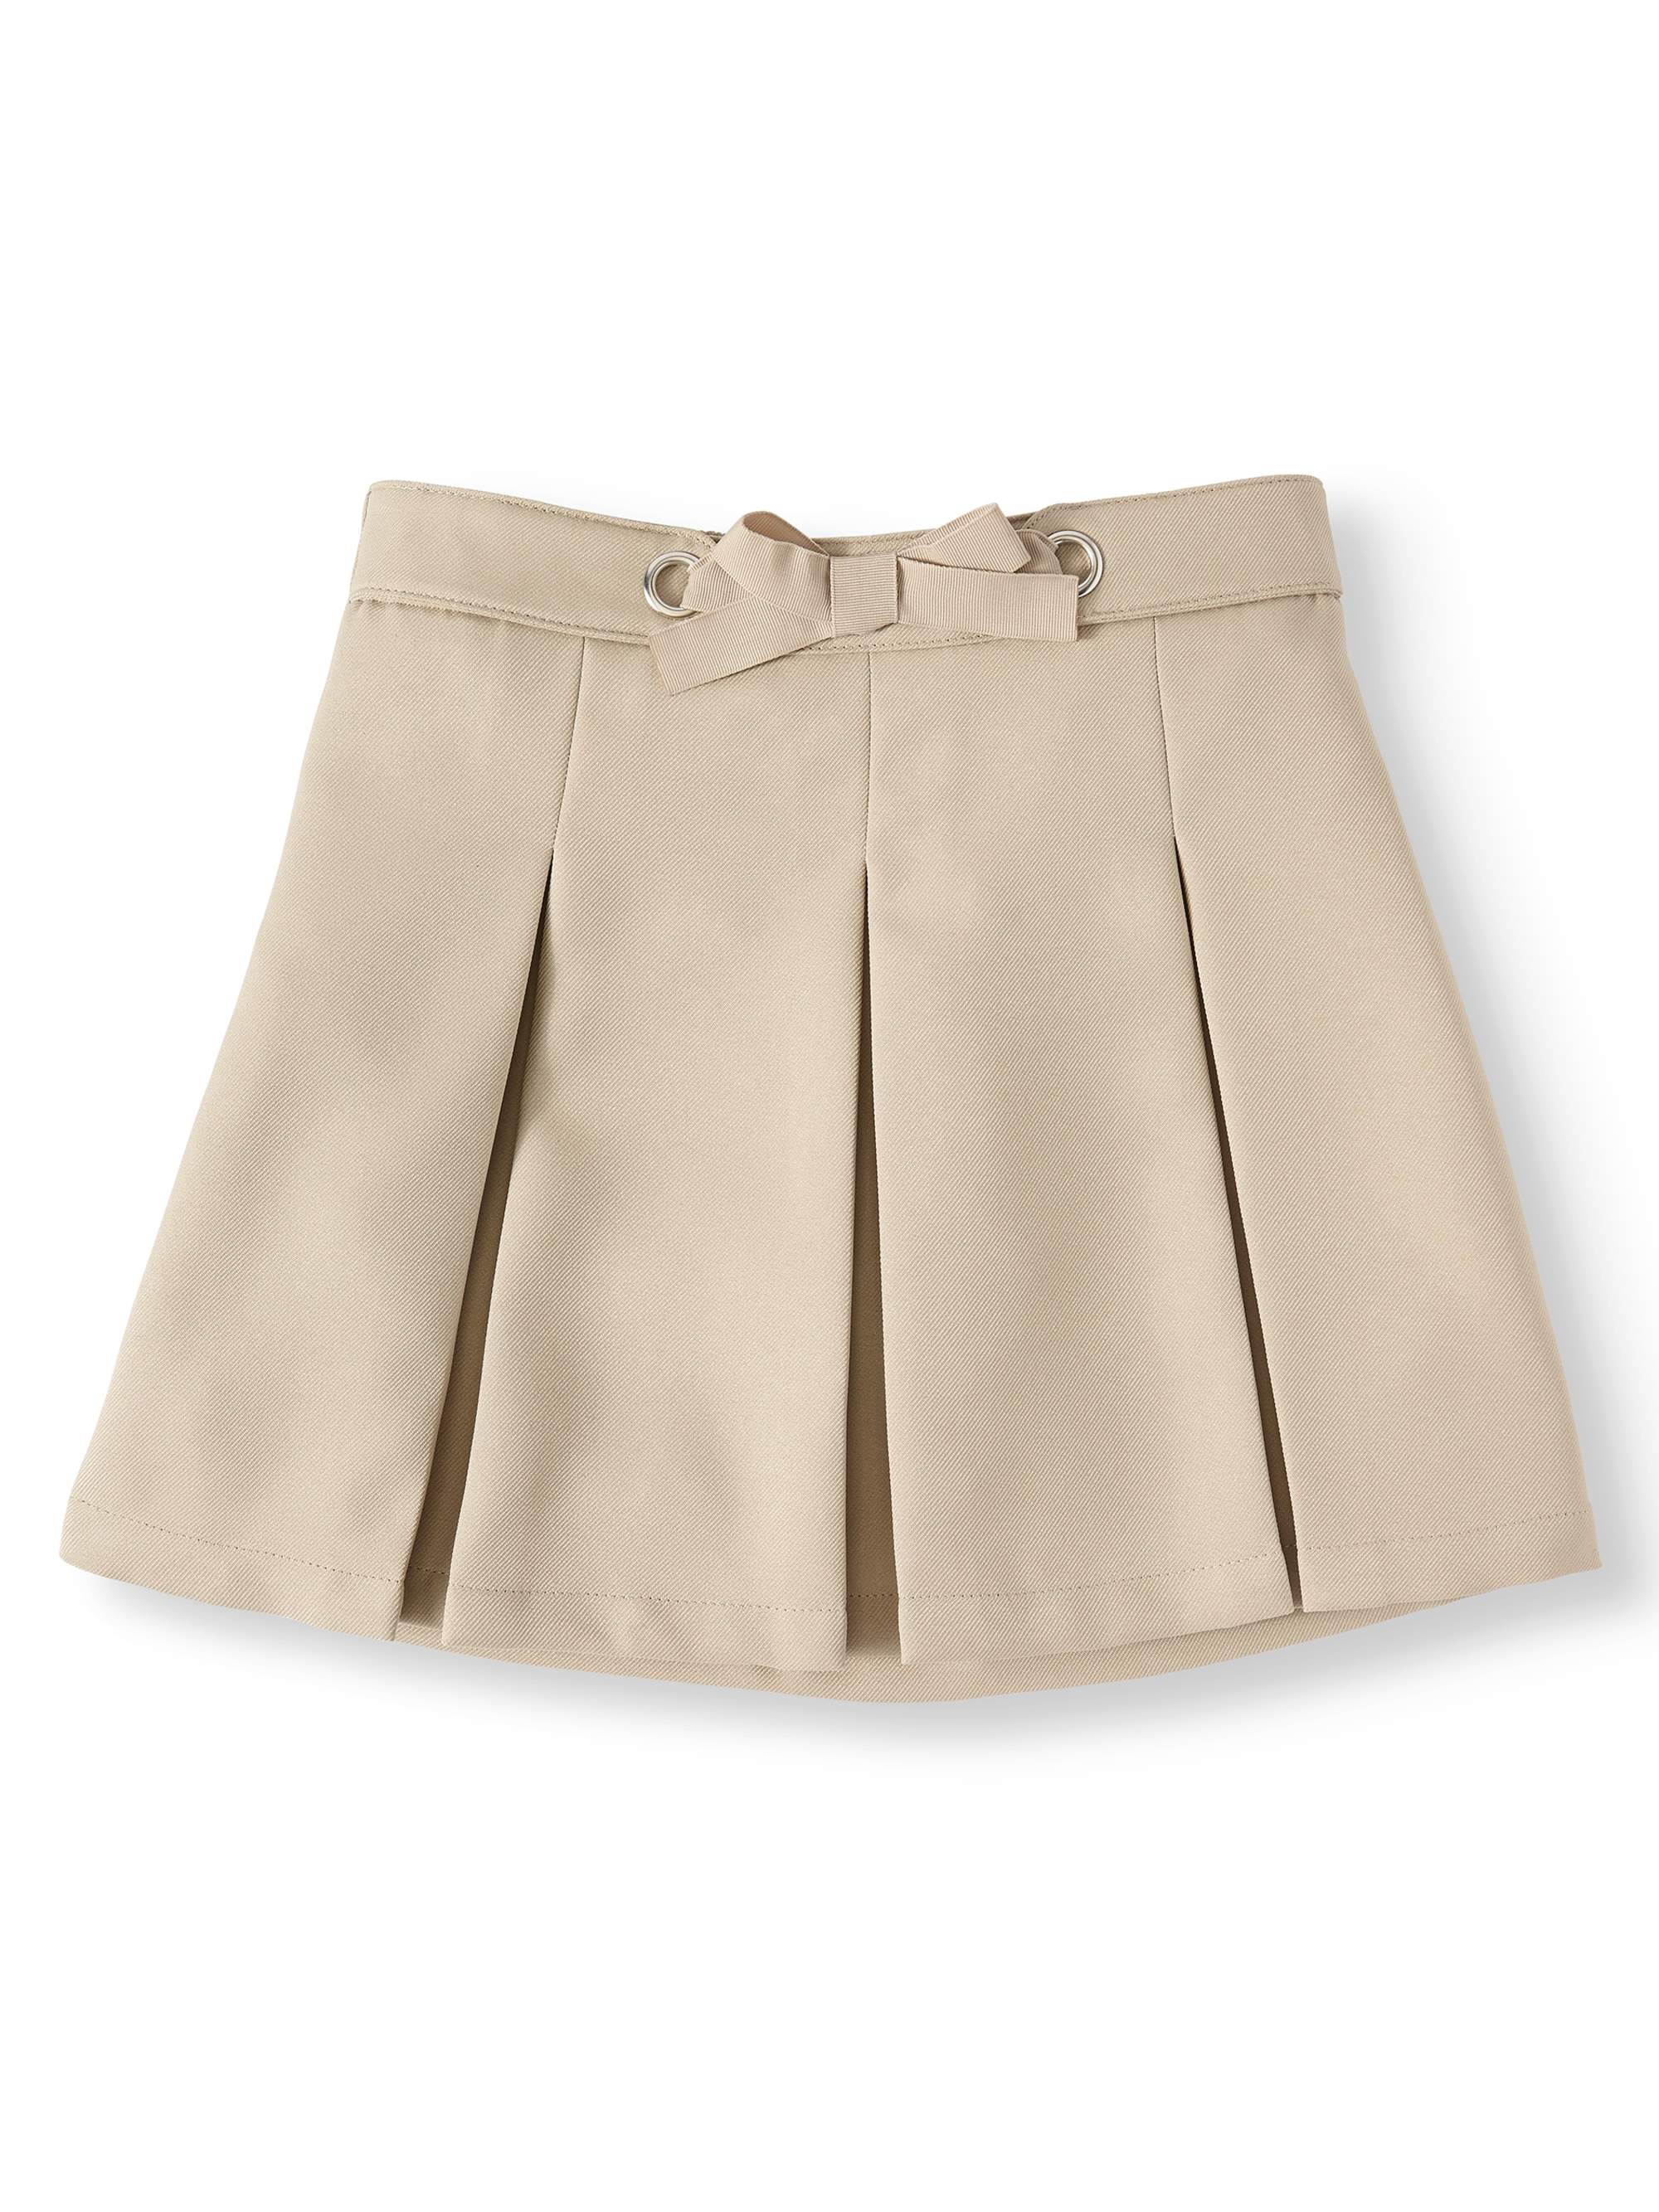 Wonder Nation Girls School Uniform Bow Scooter Skirt, Sizes 4-16 & Plus - image 1 of 4